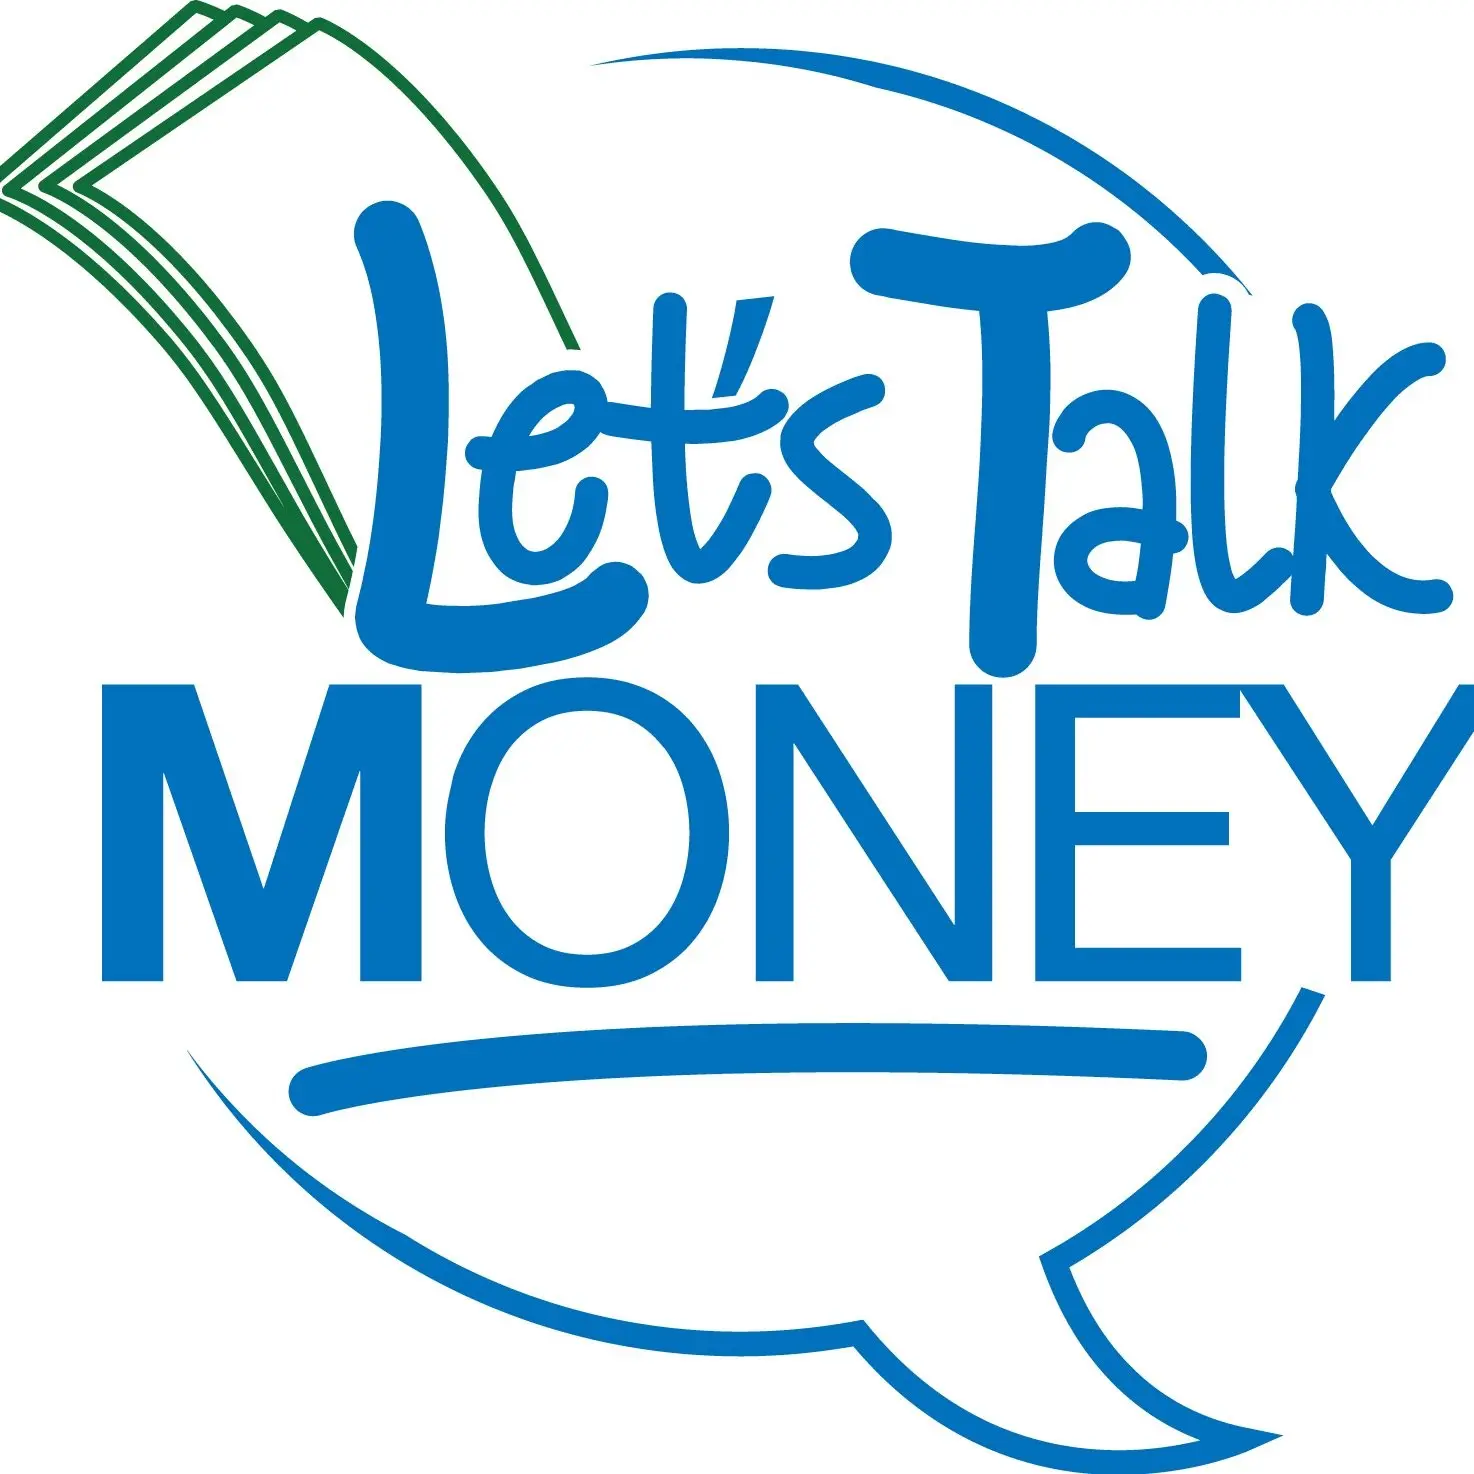 Let's talk money